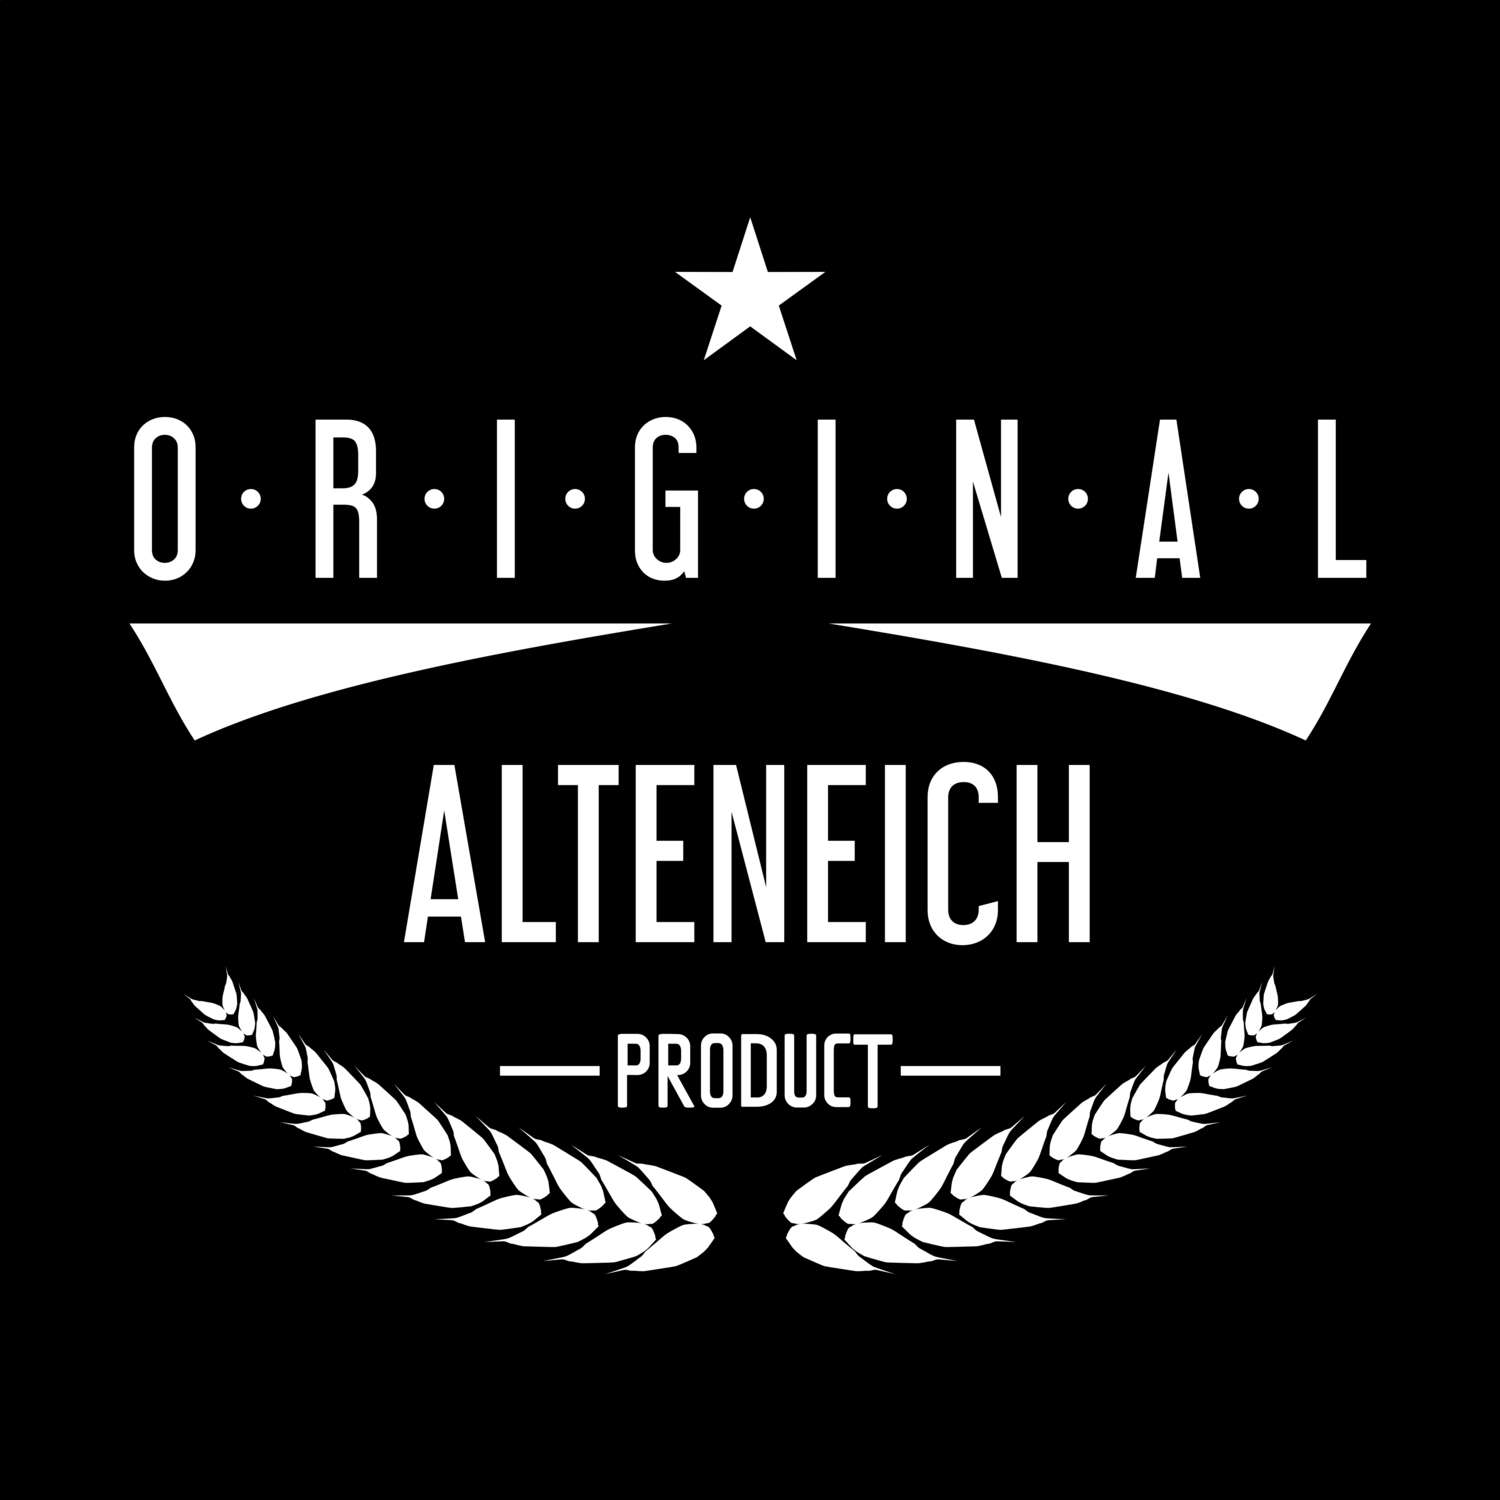 Alteneich T-Shirt »Original Product«